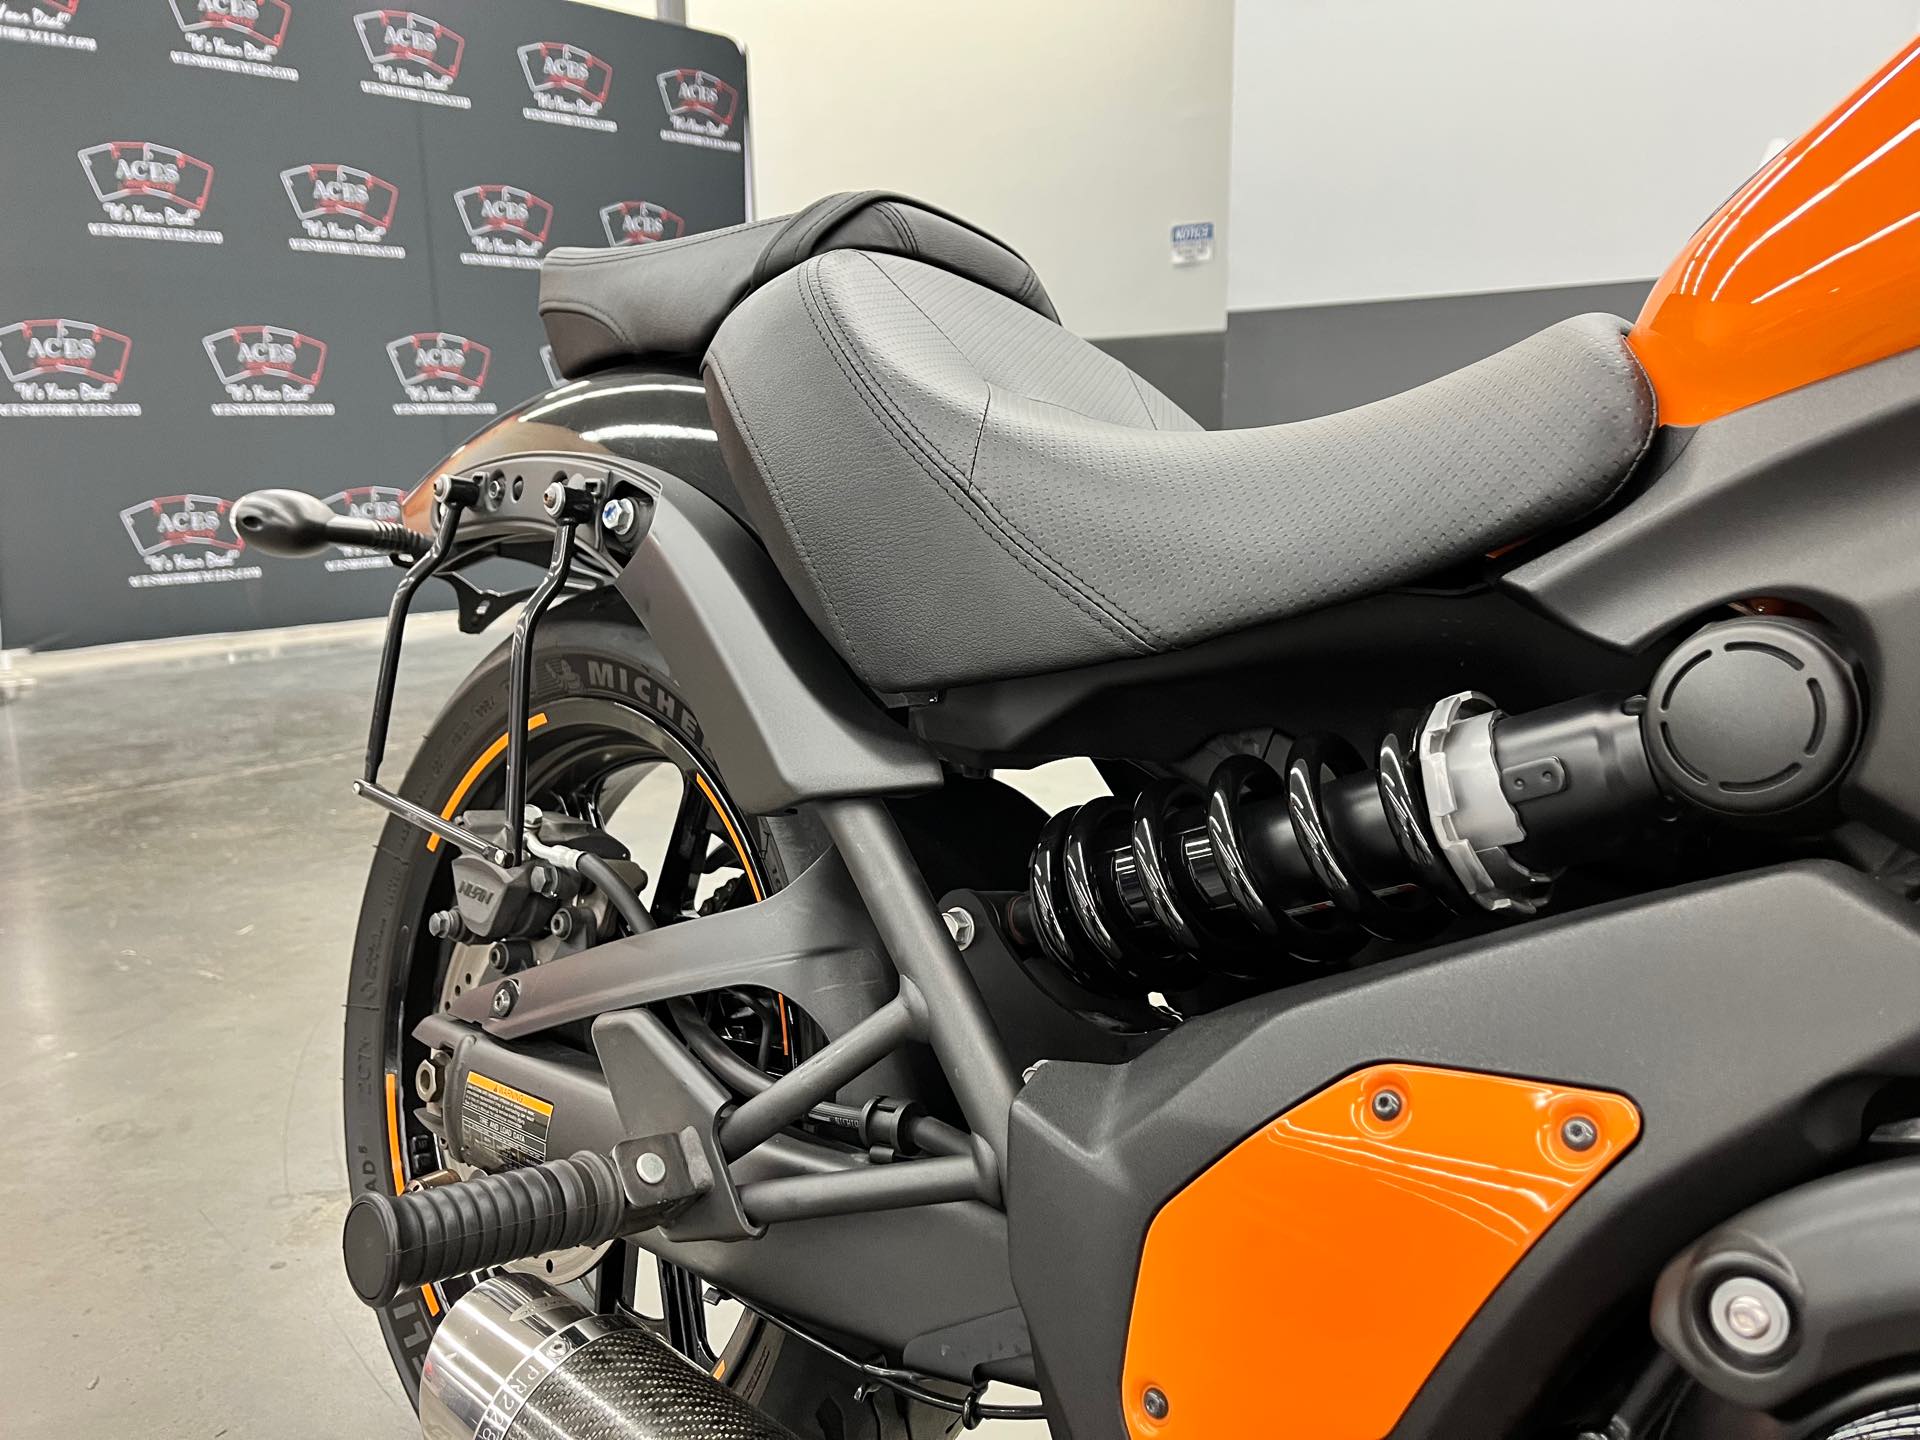 2019 Kawasaki Vulcan S ABS Café at Aces Motorcycles - Denver